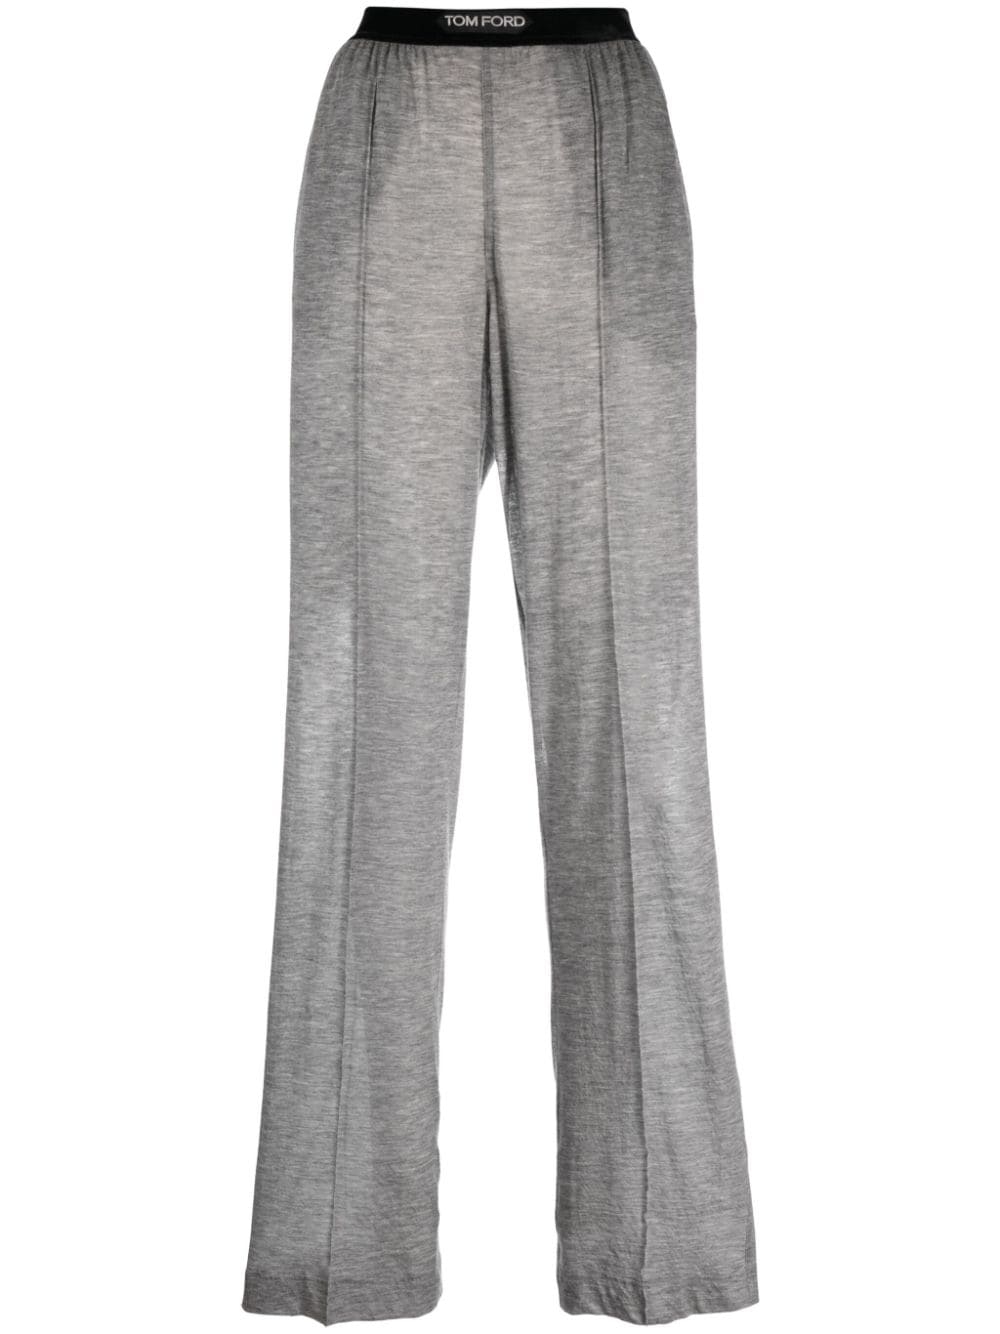 TOM FORD logo-waistband cashmere track pants - Grey von TOM FORD